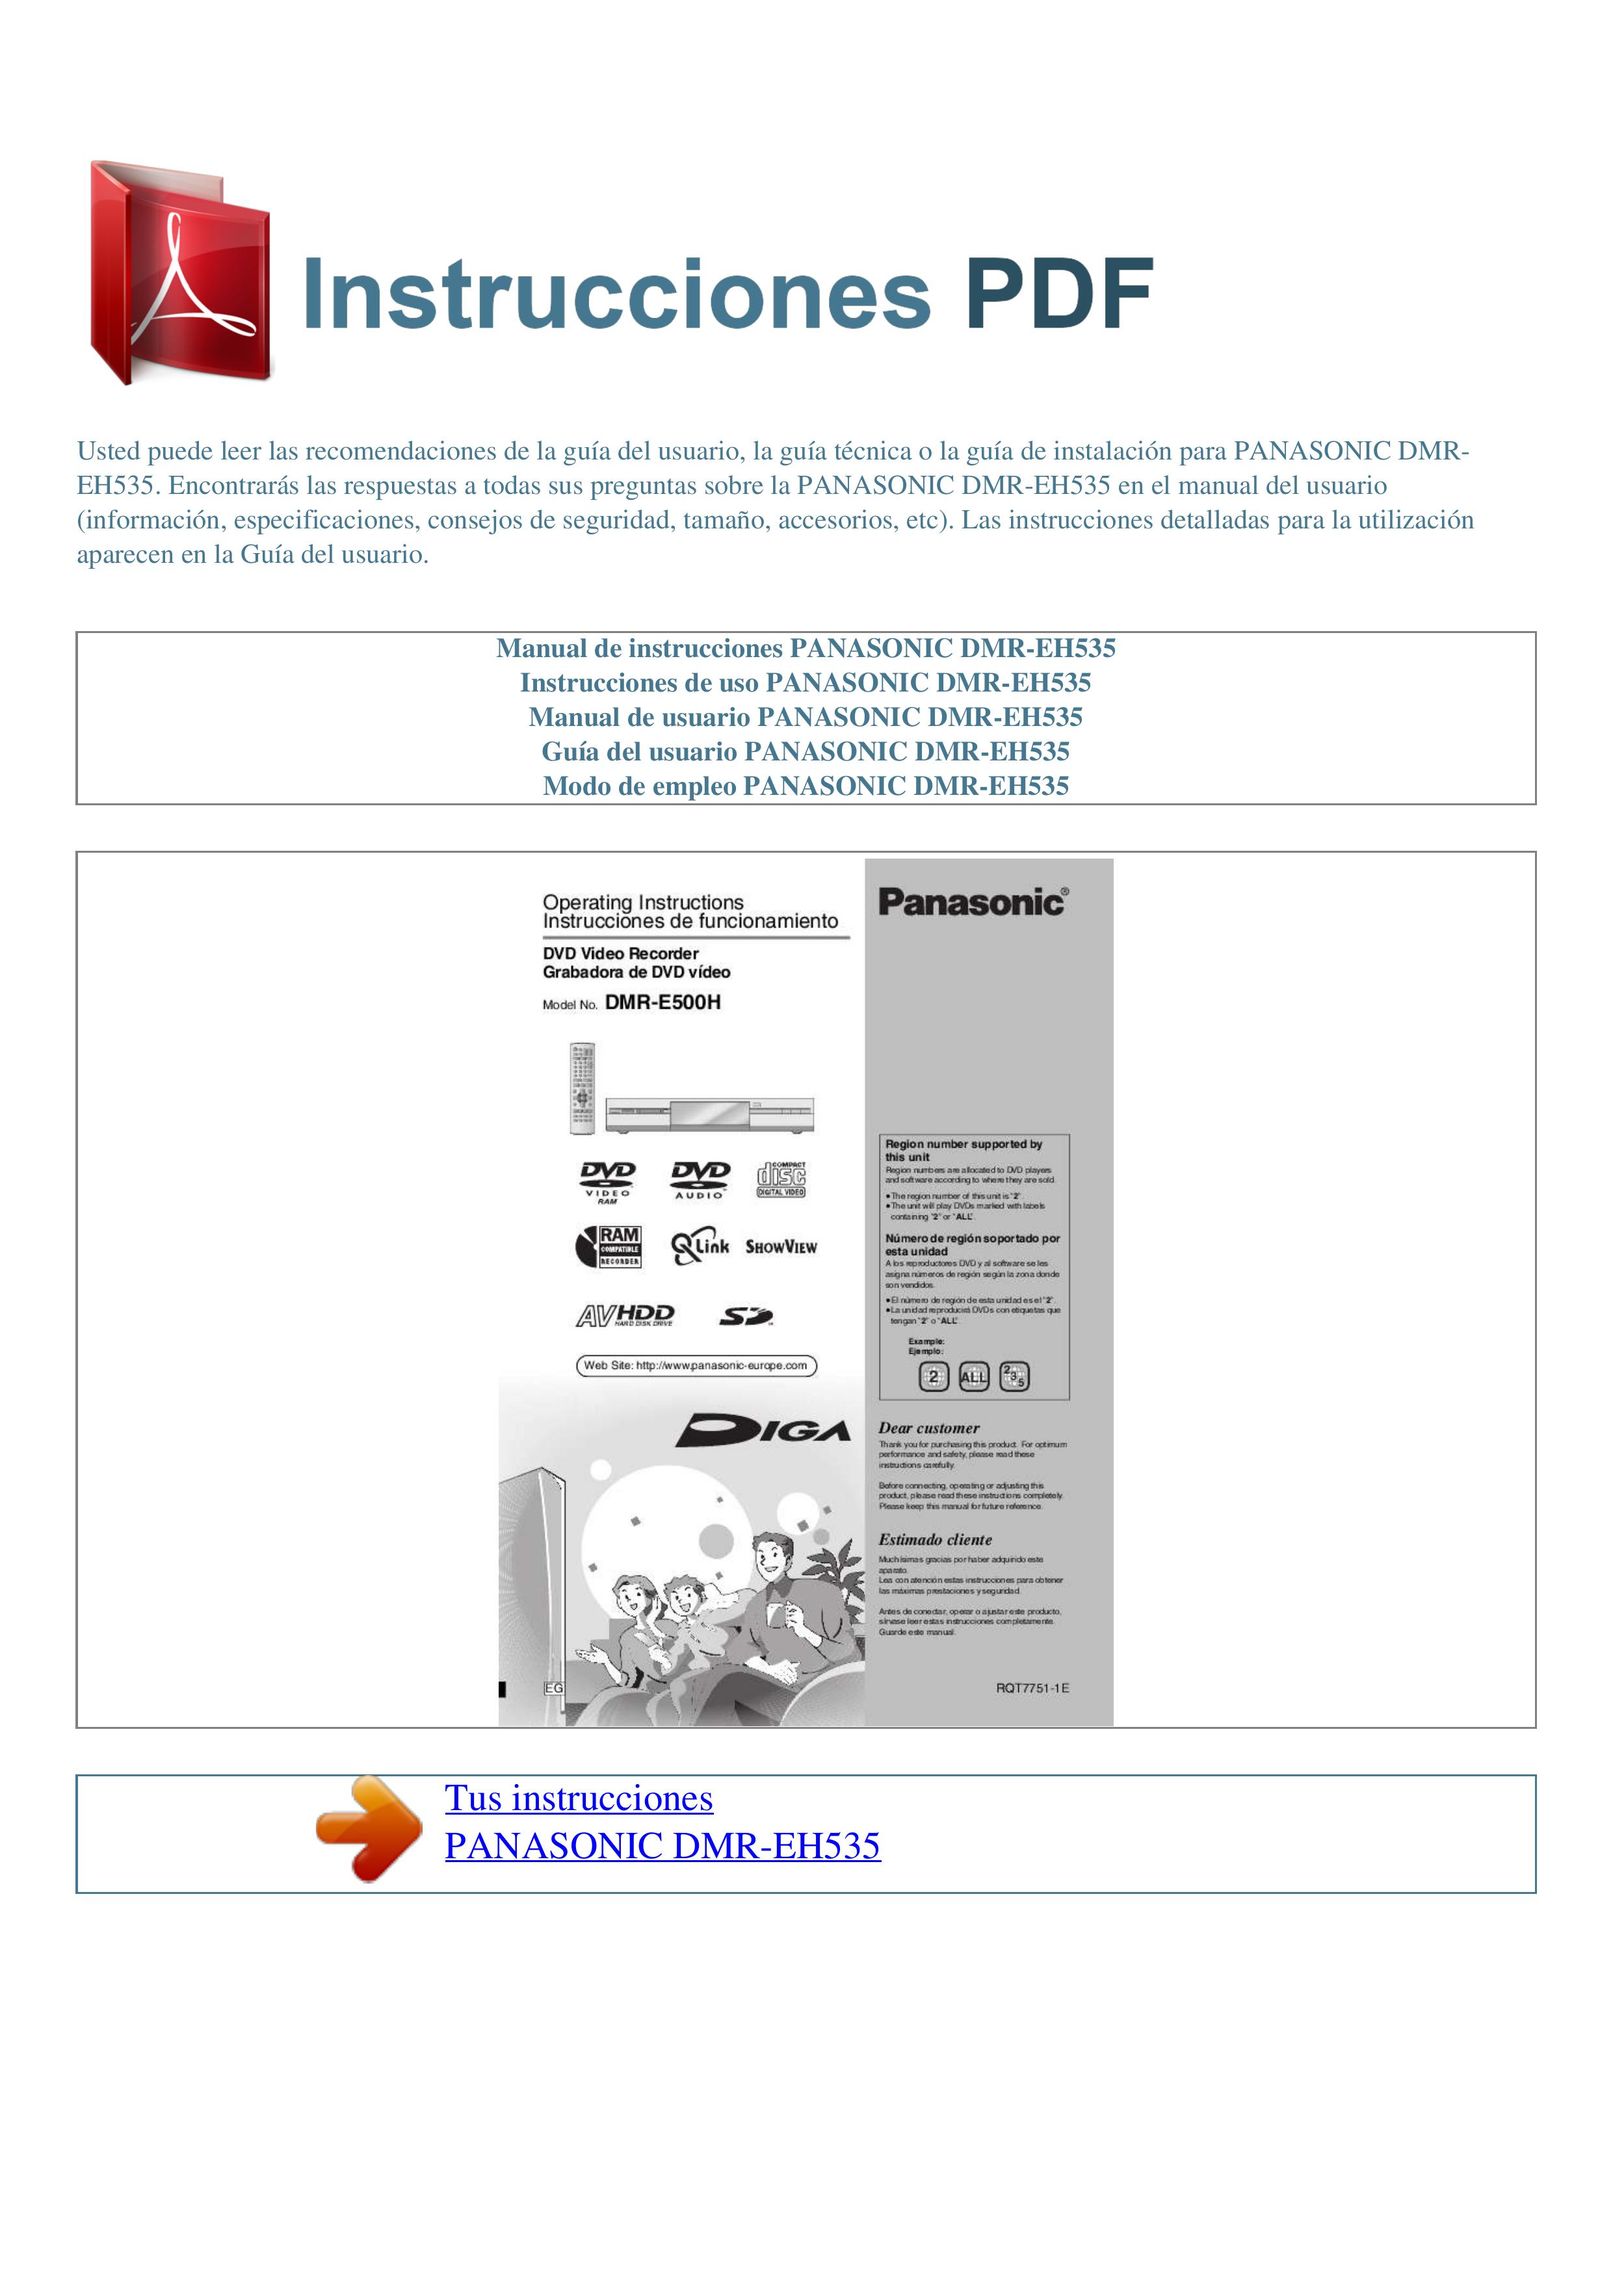 Panasonic DMR-EH535 DVD Player User Manual